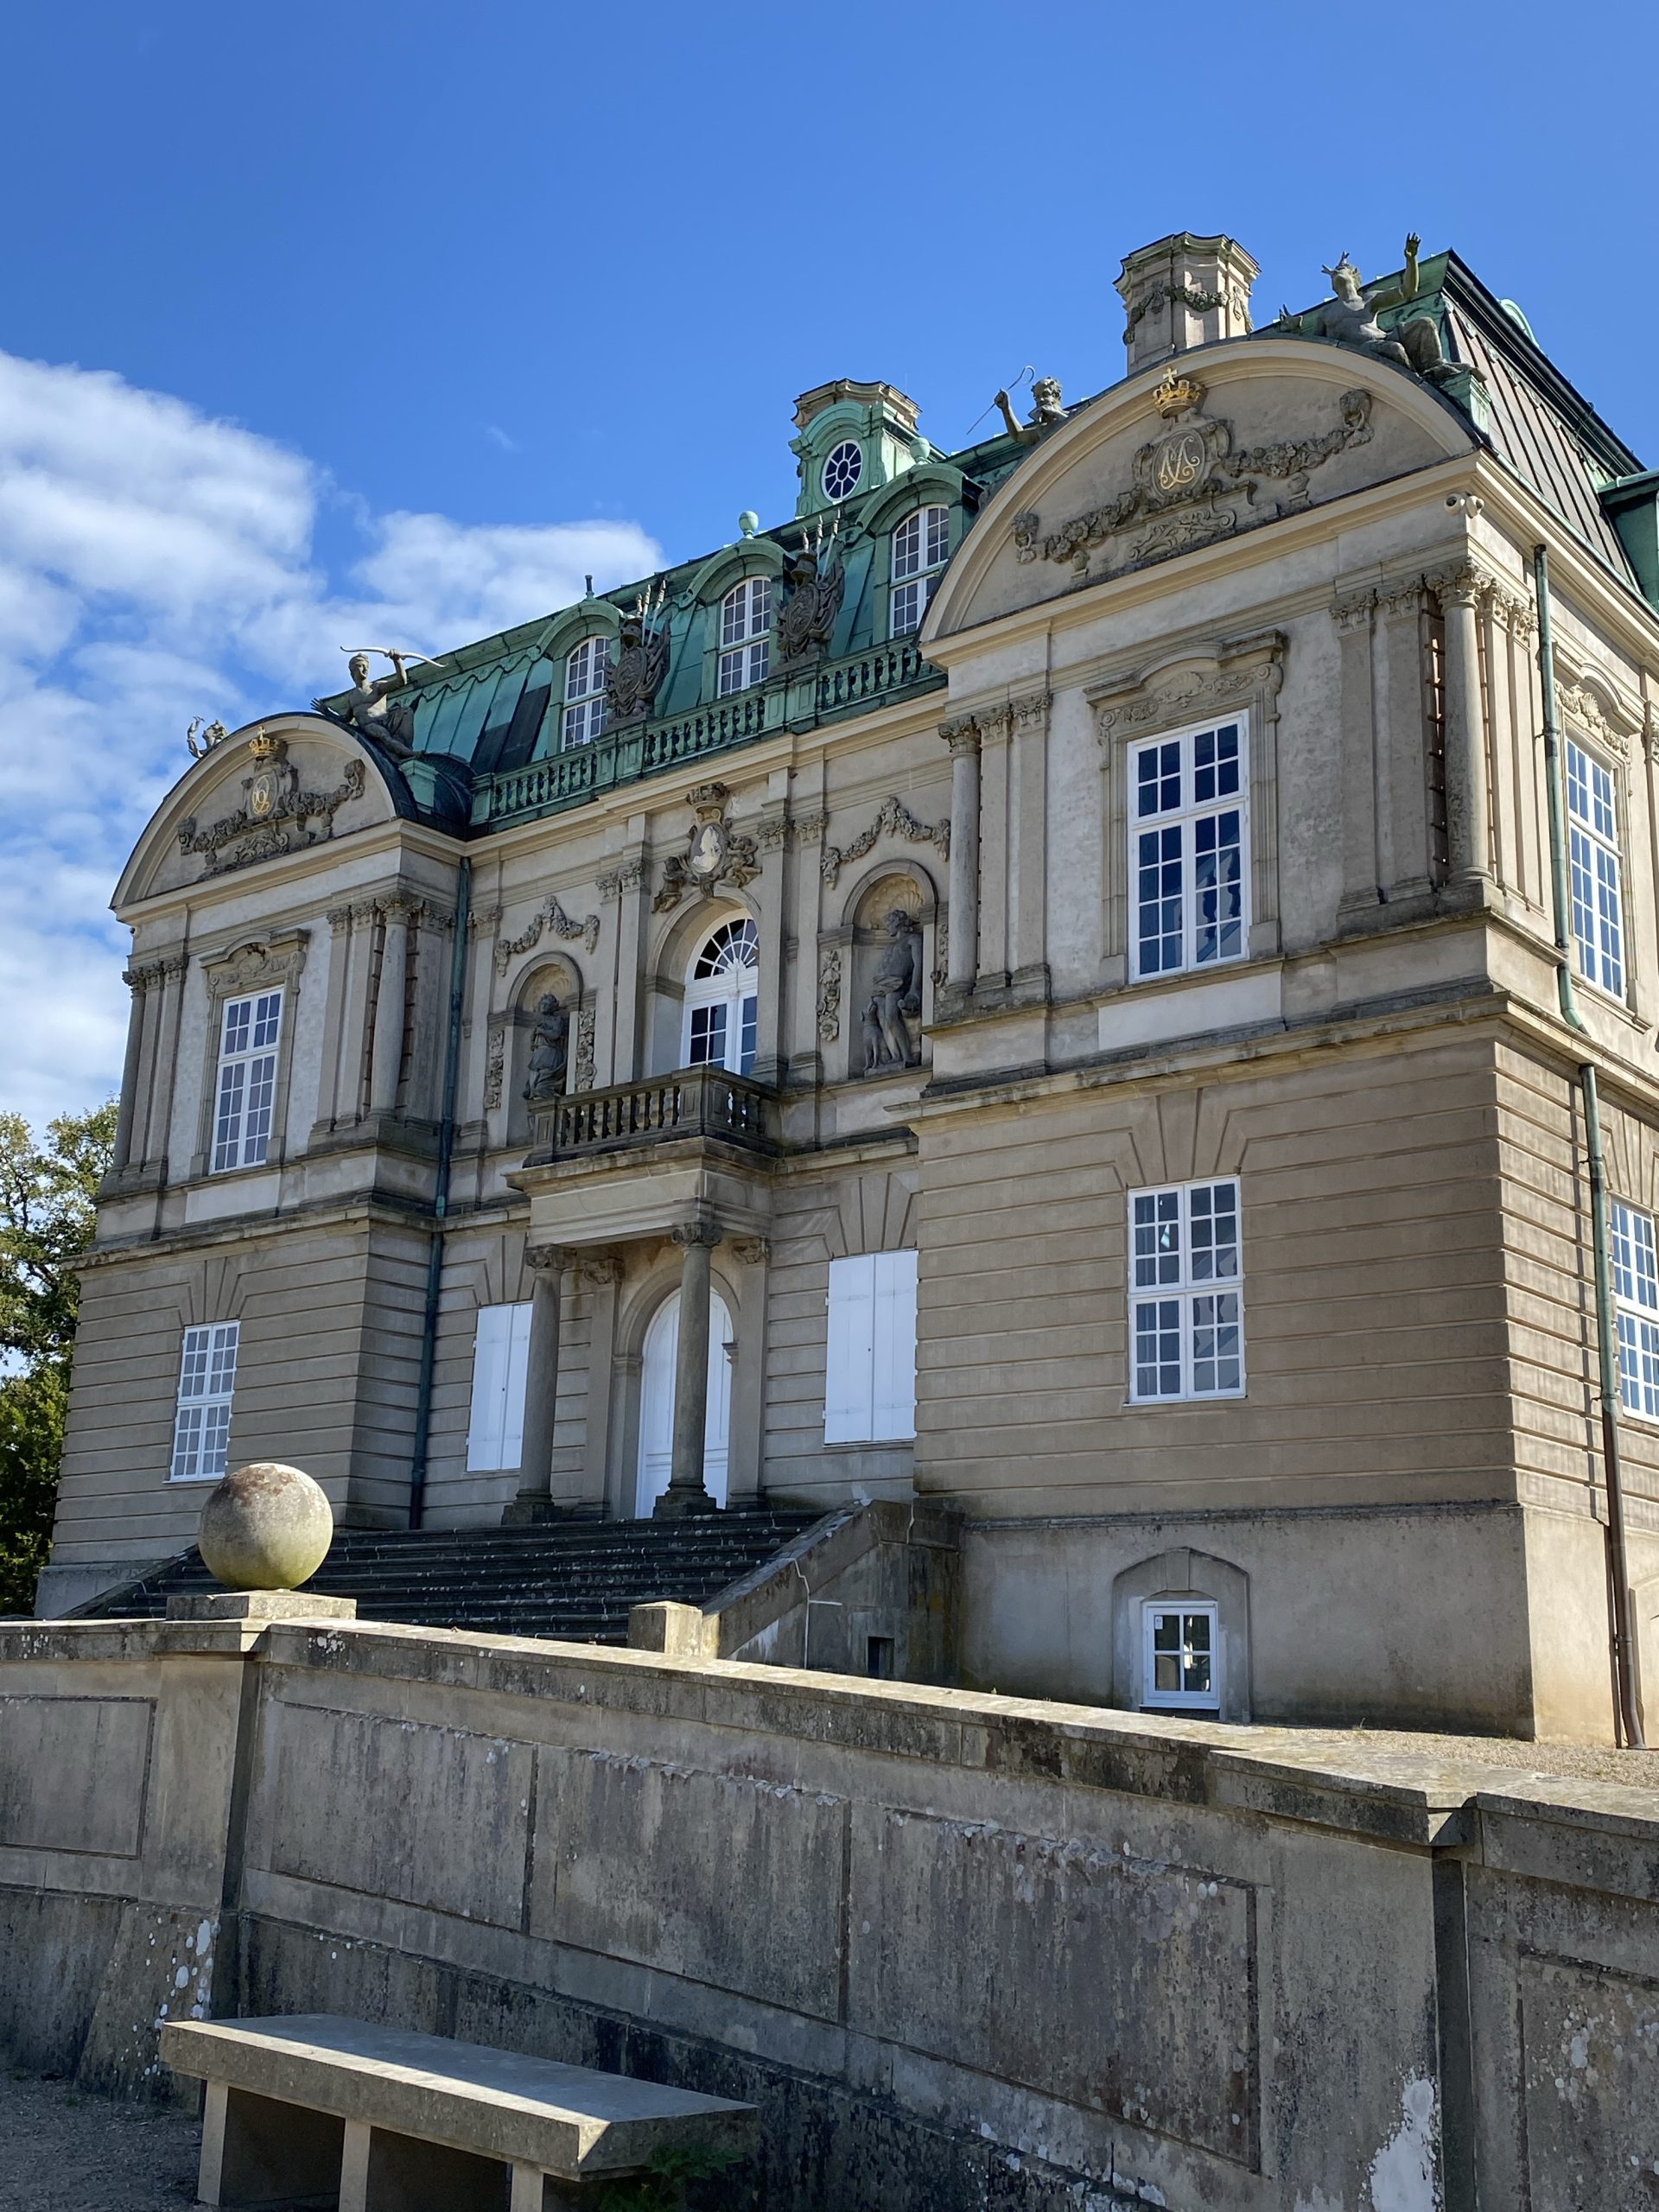 The Hermitage, King's Hunting Lodge, Copenhagen, Copenhagen by bike, Jaegersborg Dyrehave, Deer park, thatched roofs, Danish royalty